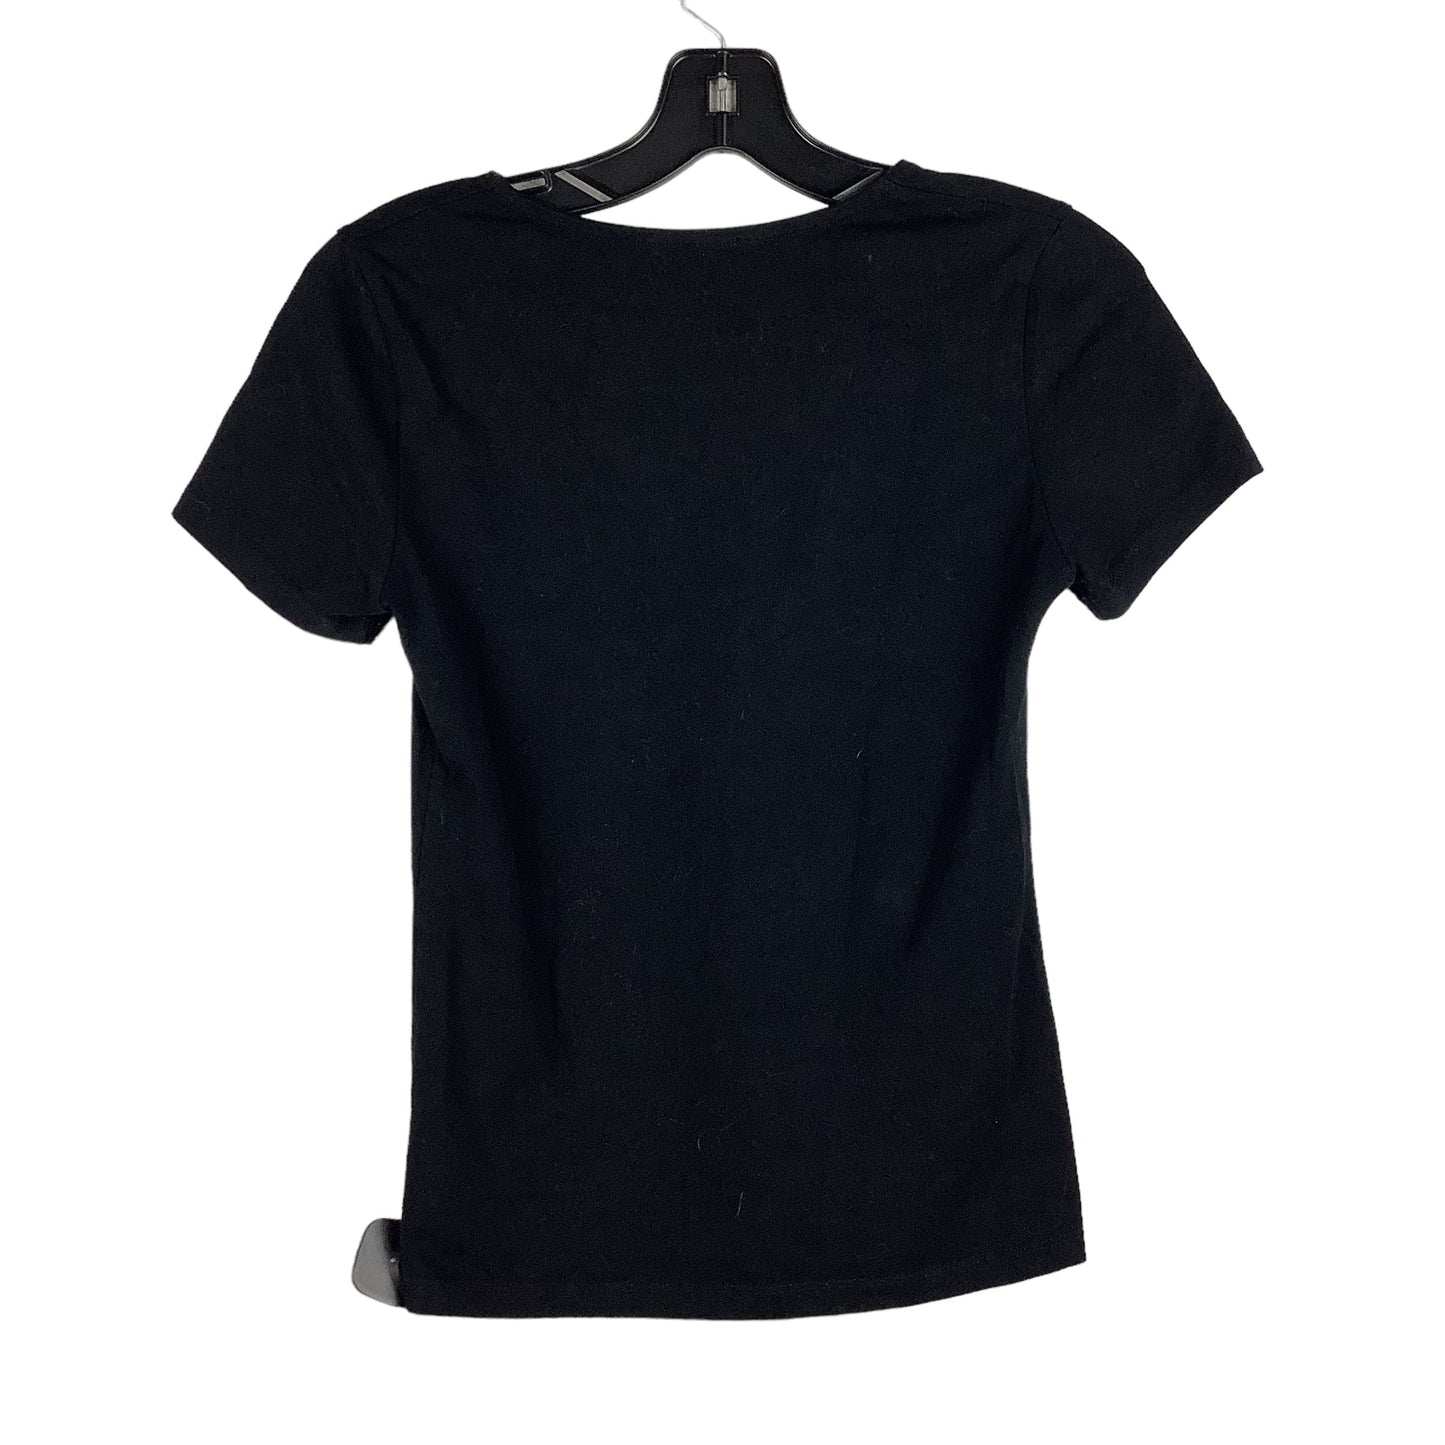 Black Top Short Sleeve Basic Karen Millen, Size 2